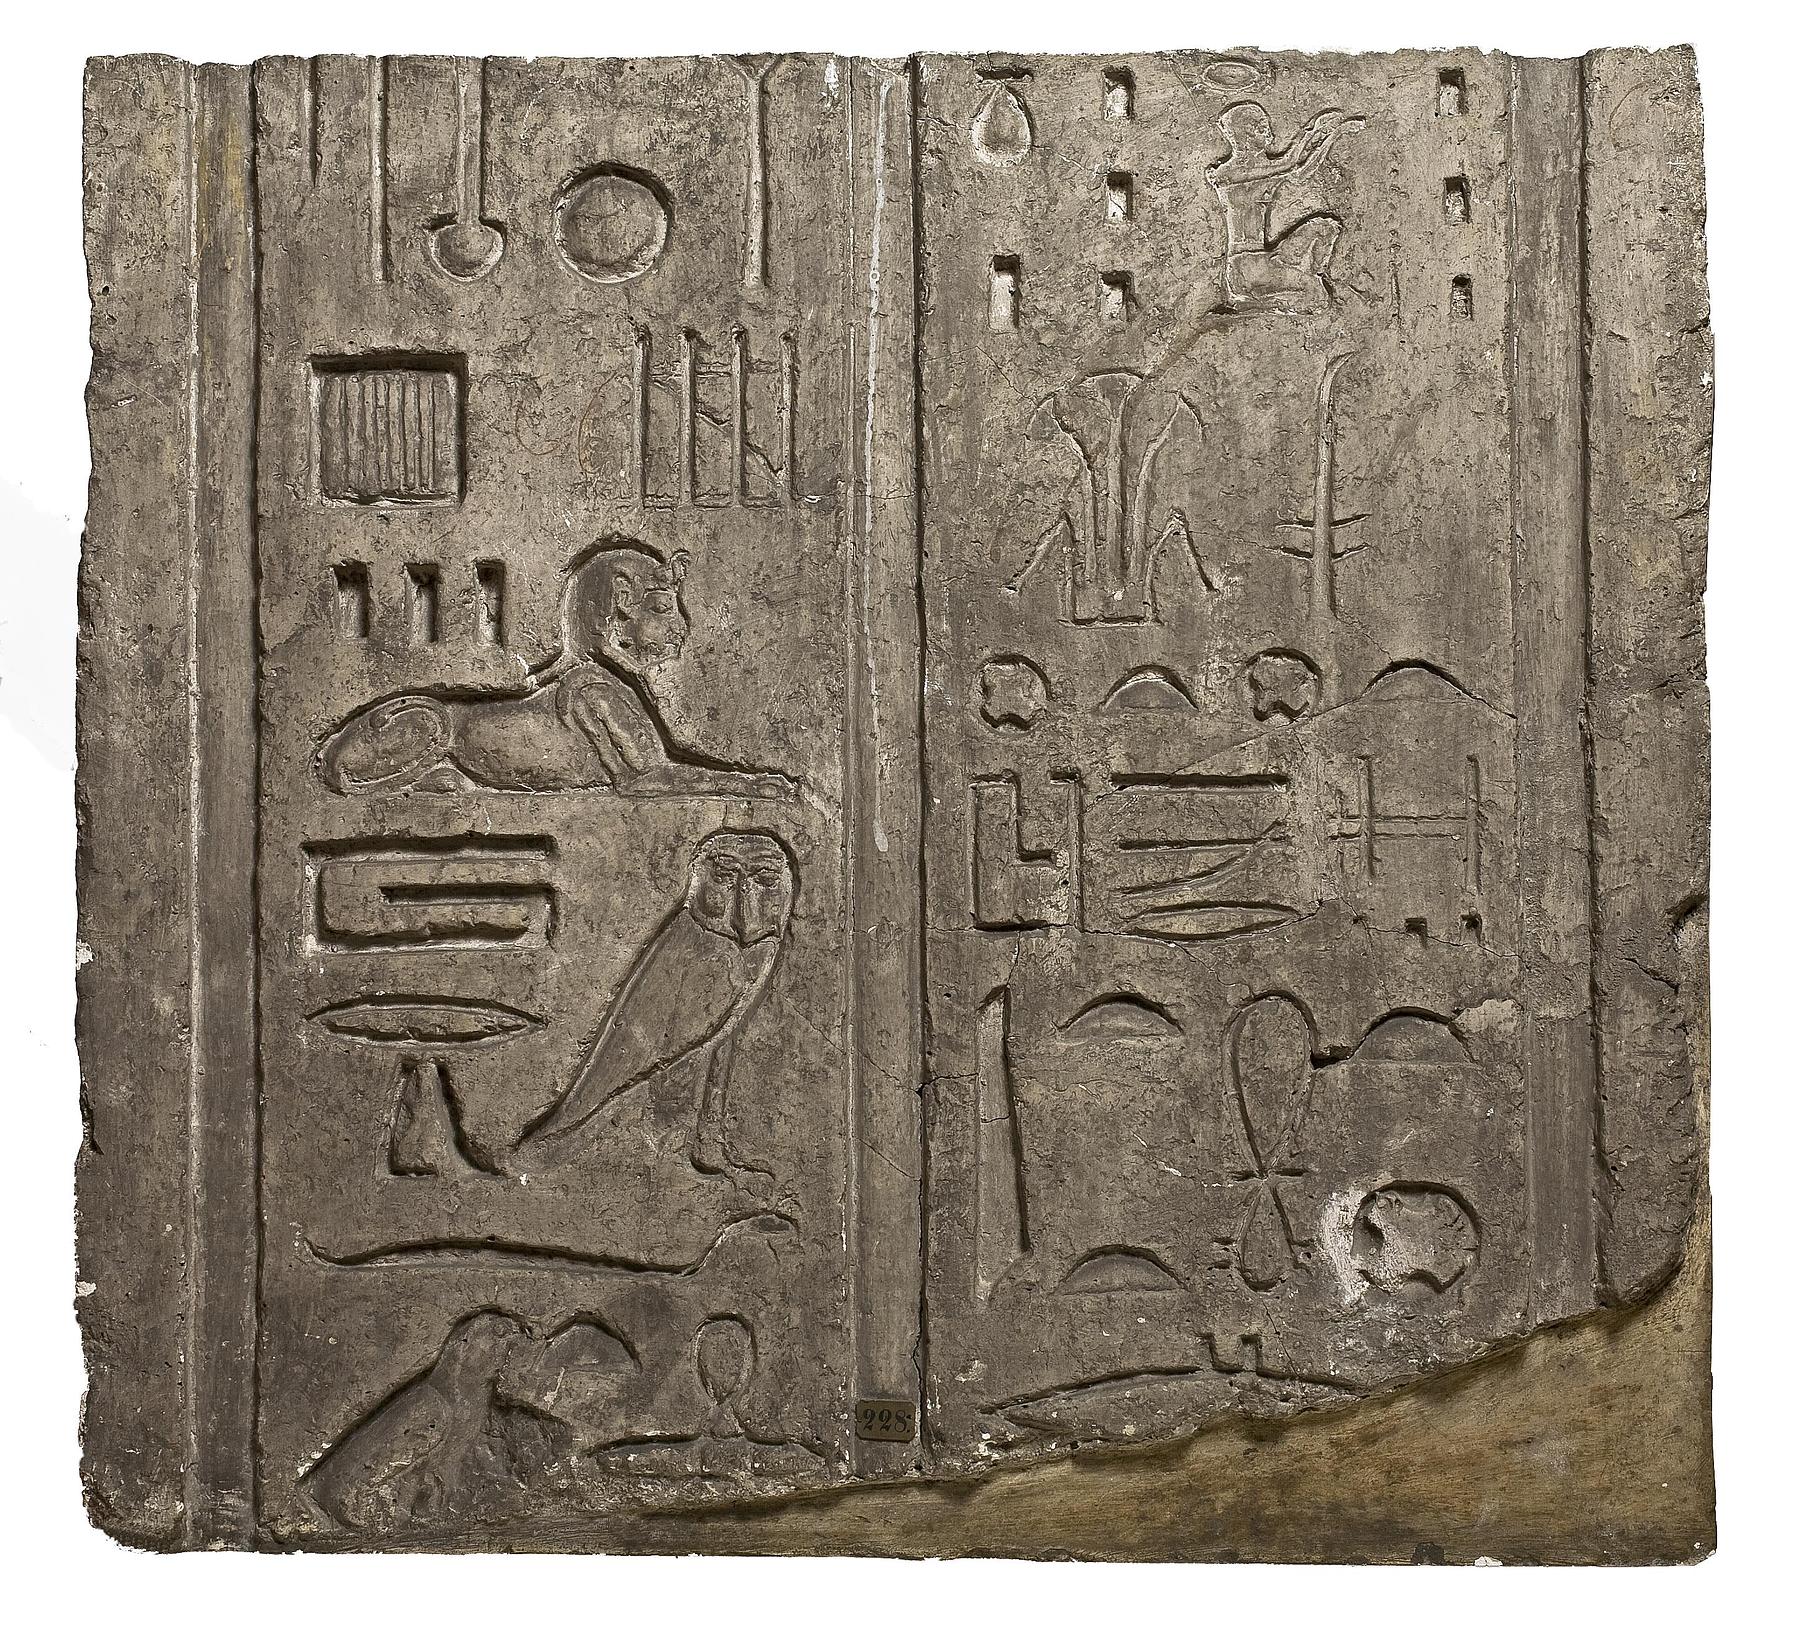 Hieroglyphic inscription, L228